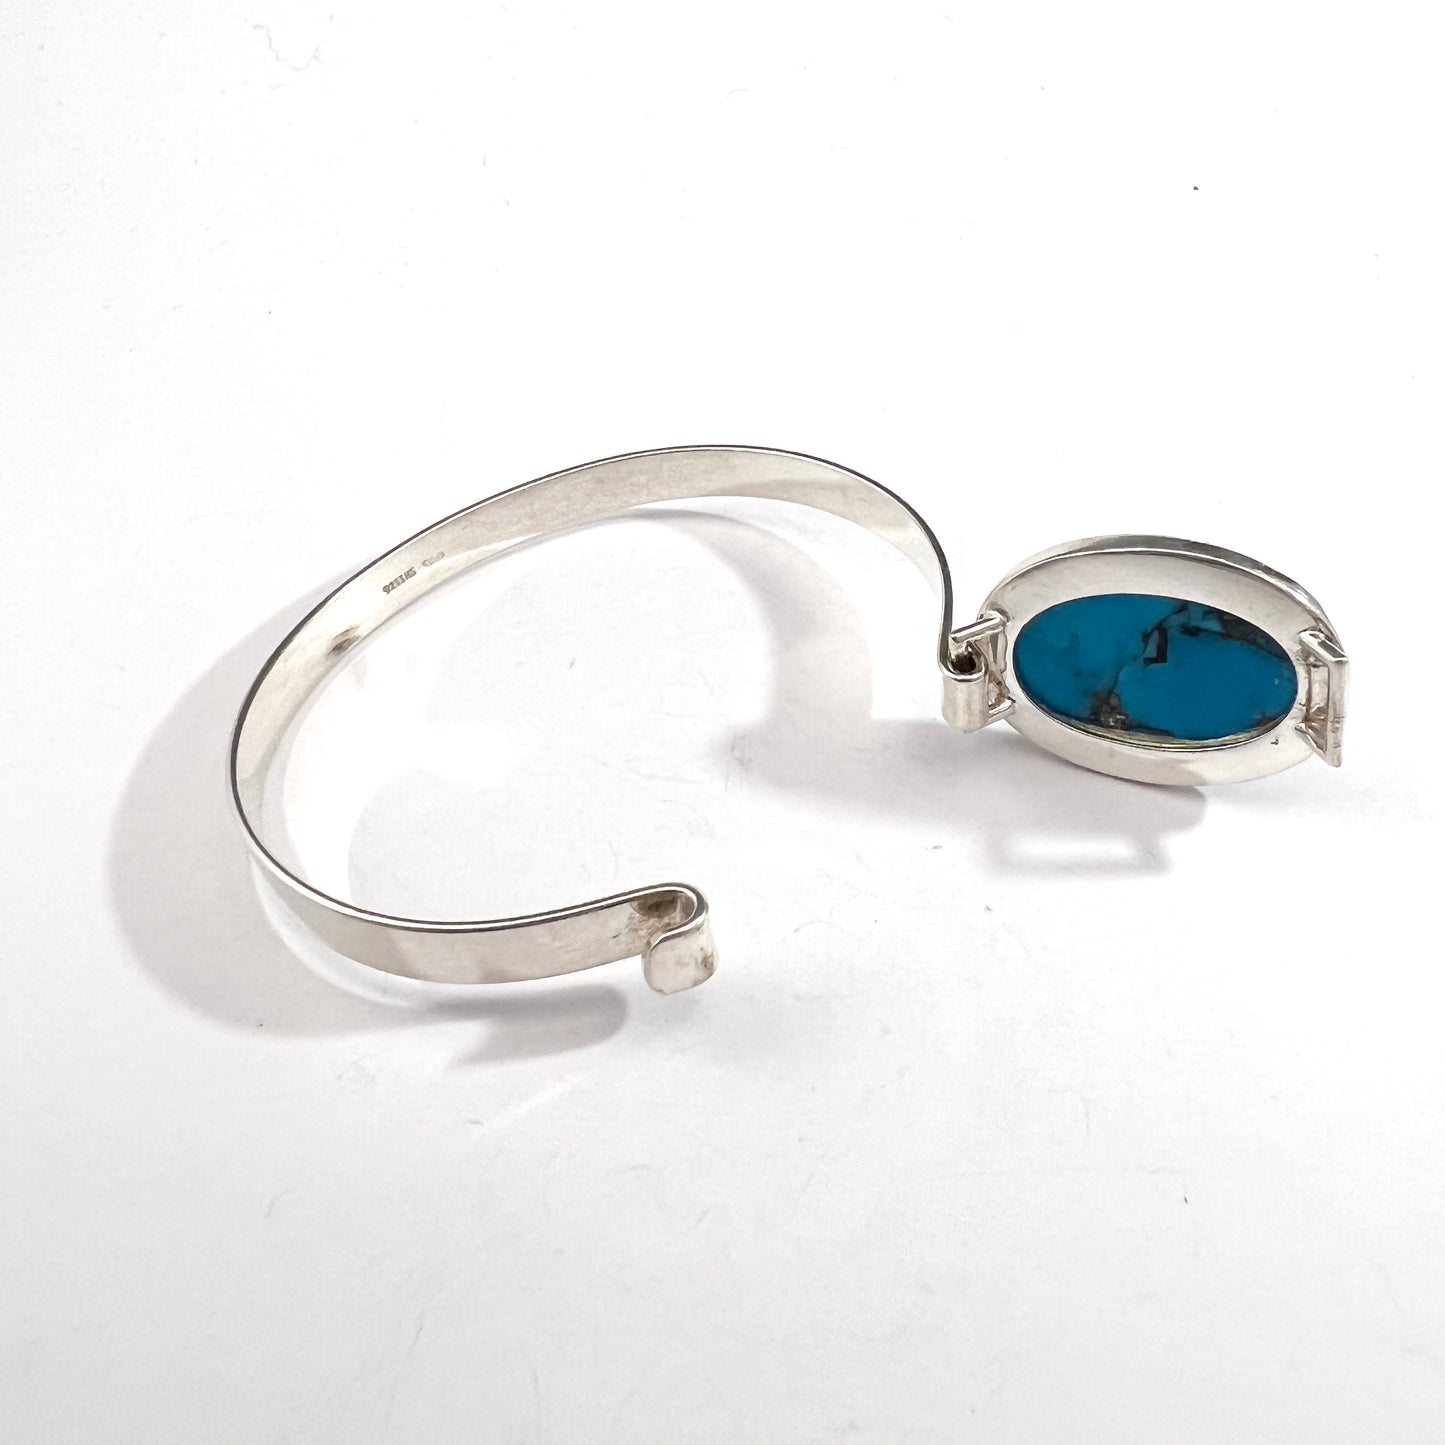 Herman Siersbøl Denmark 1950-60s. Sterling Silver Turquoise Hinged Bracelet.